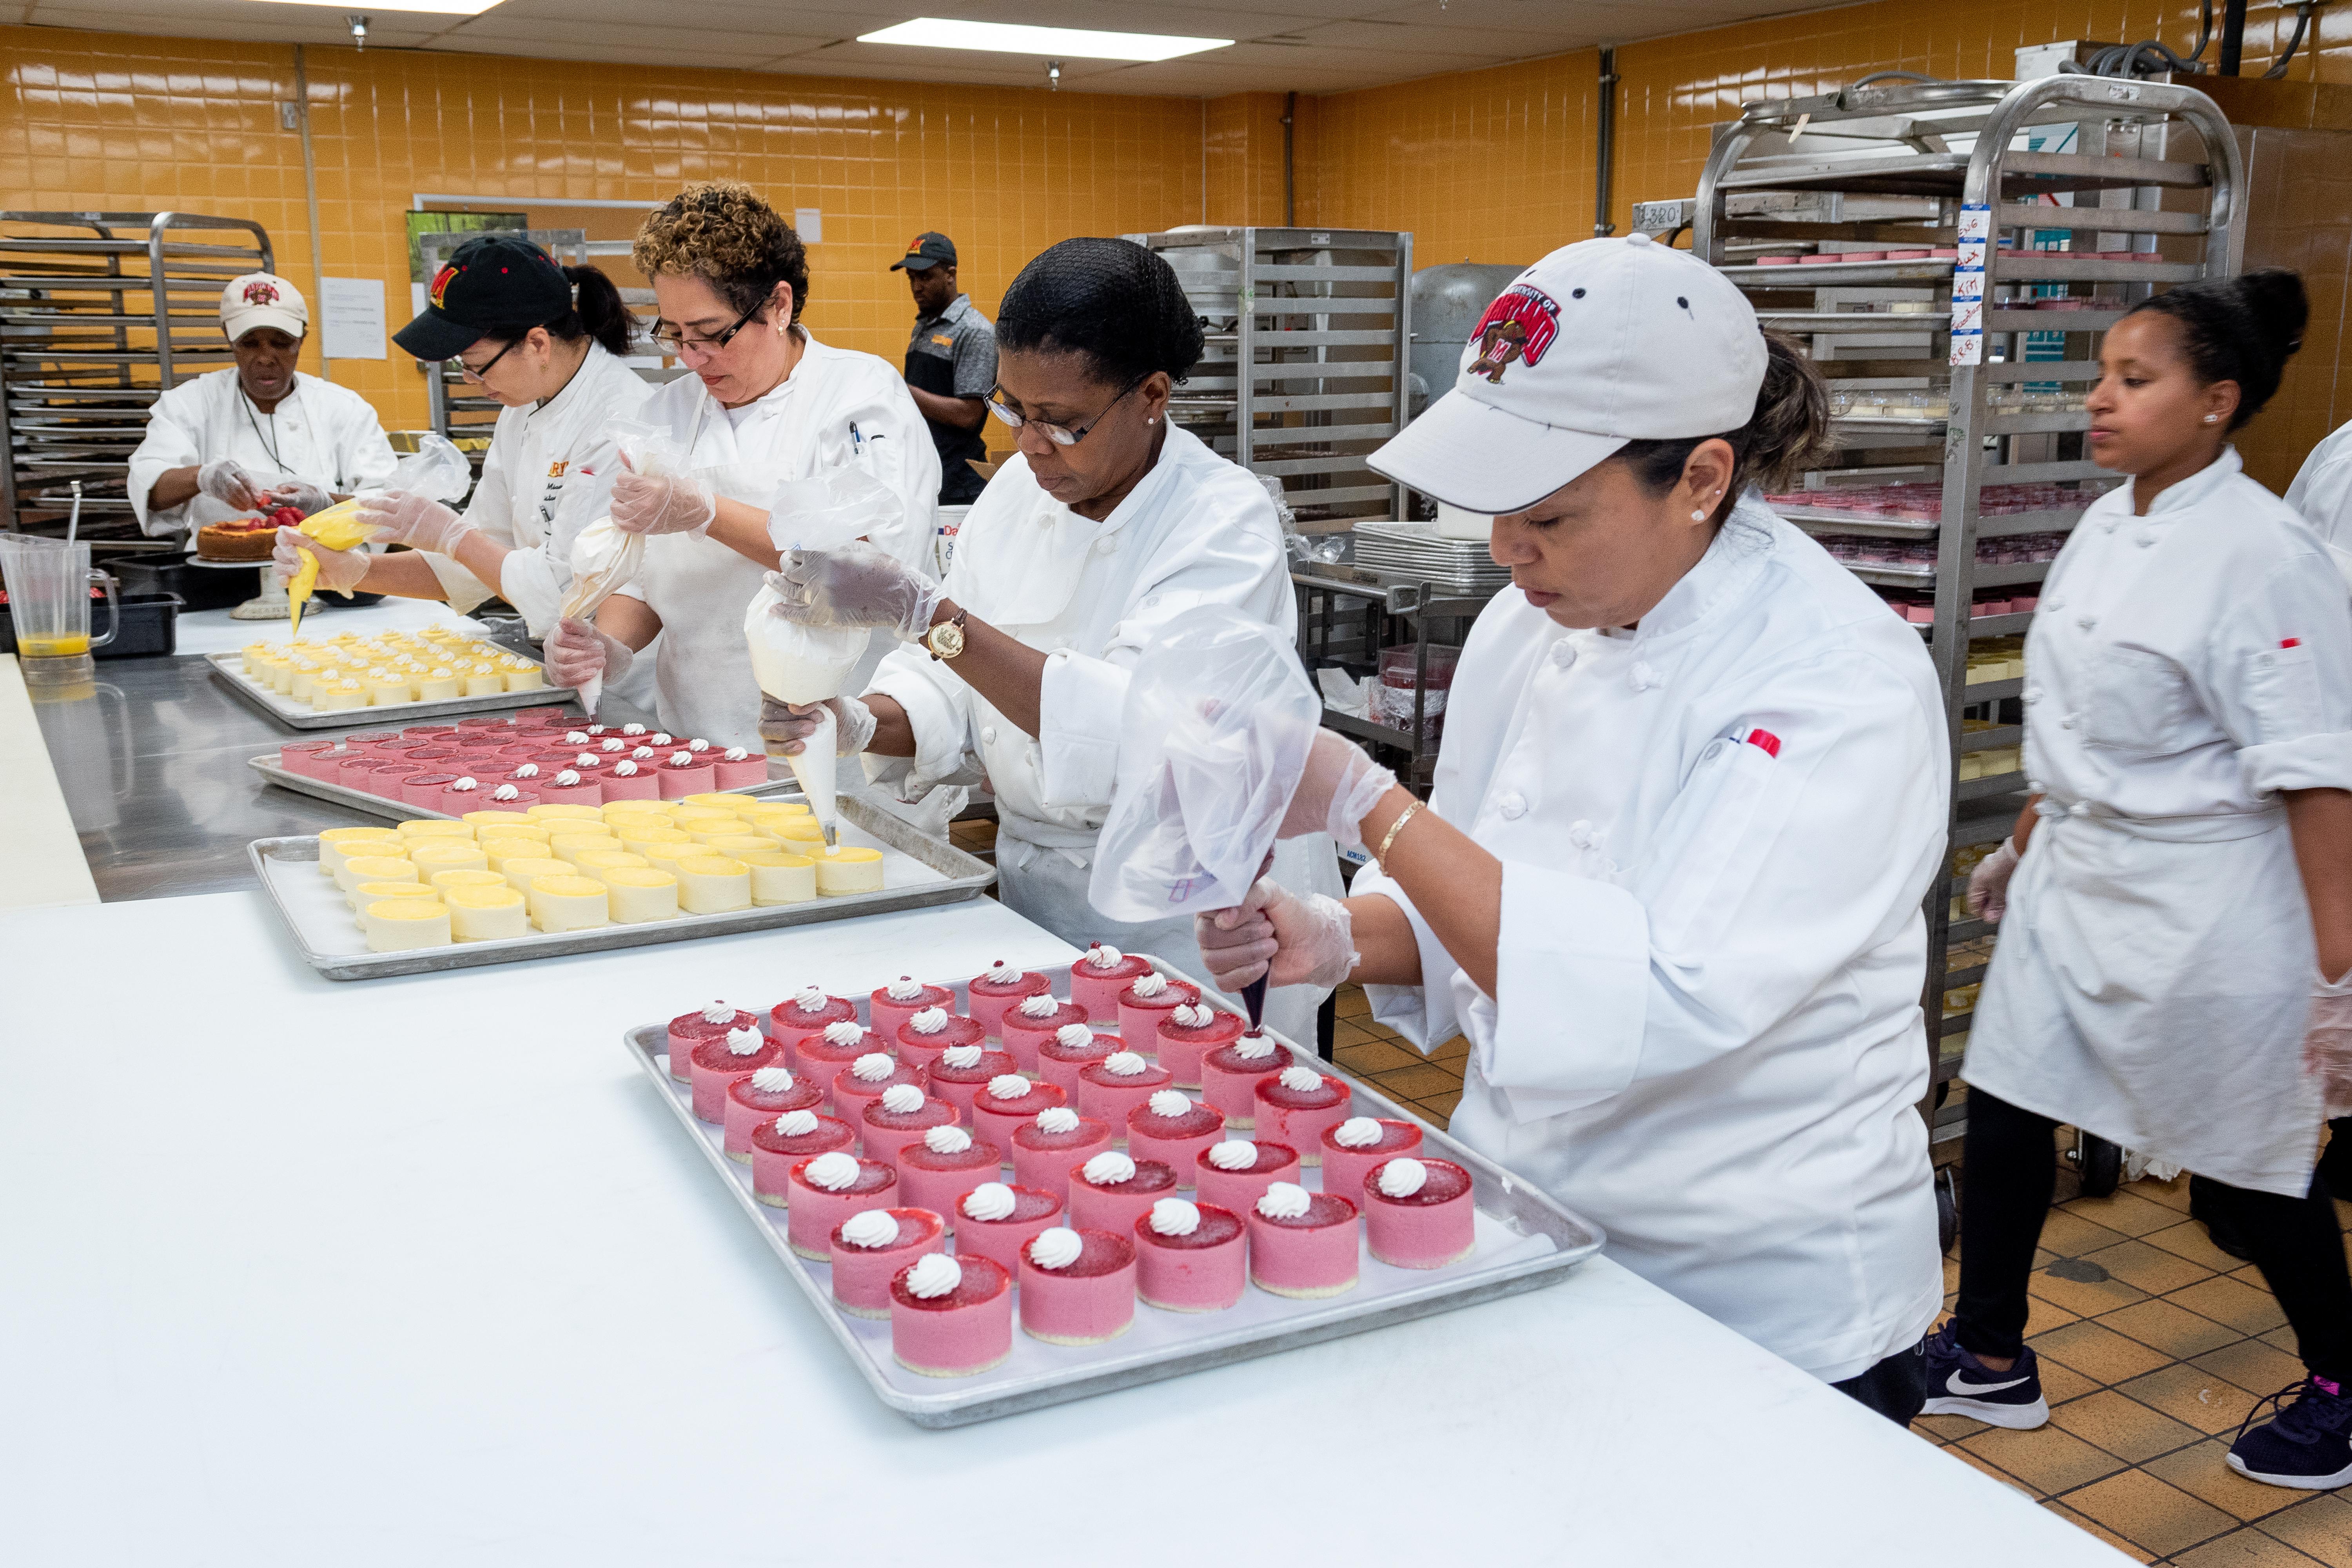 Maryland Bakery Chefs preparing cupcakes